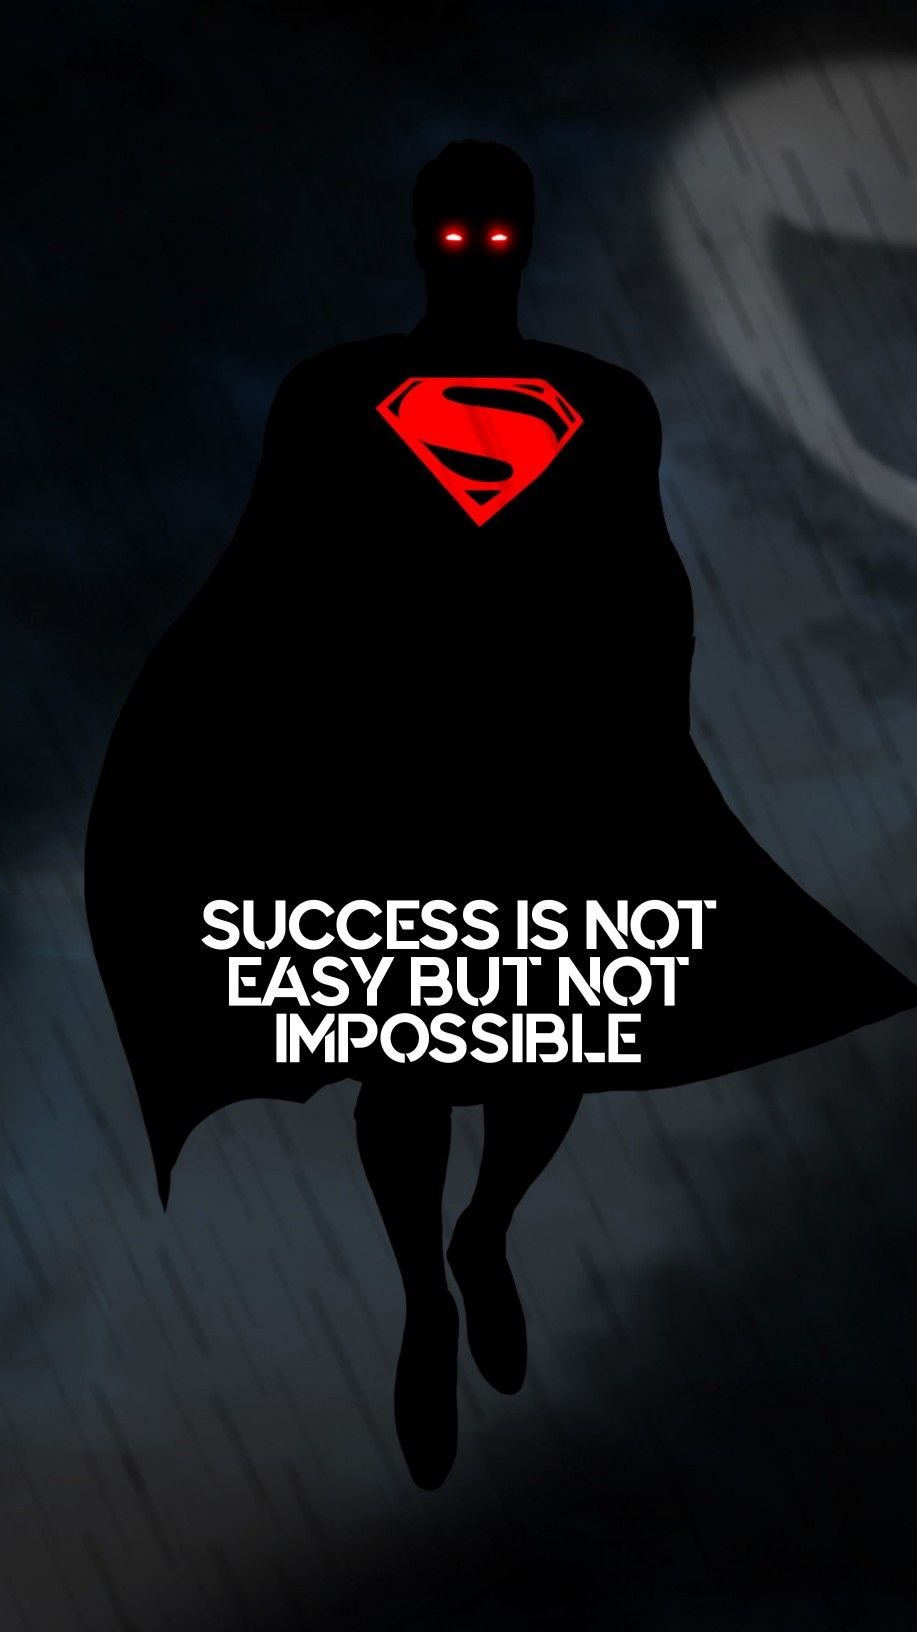 superman quotes inspirational